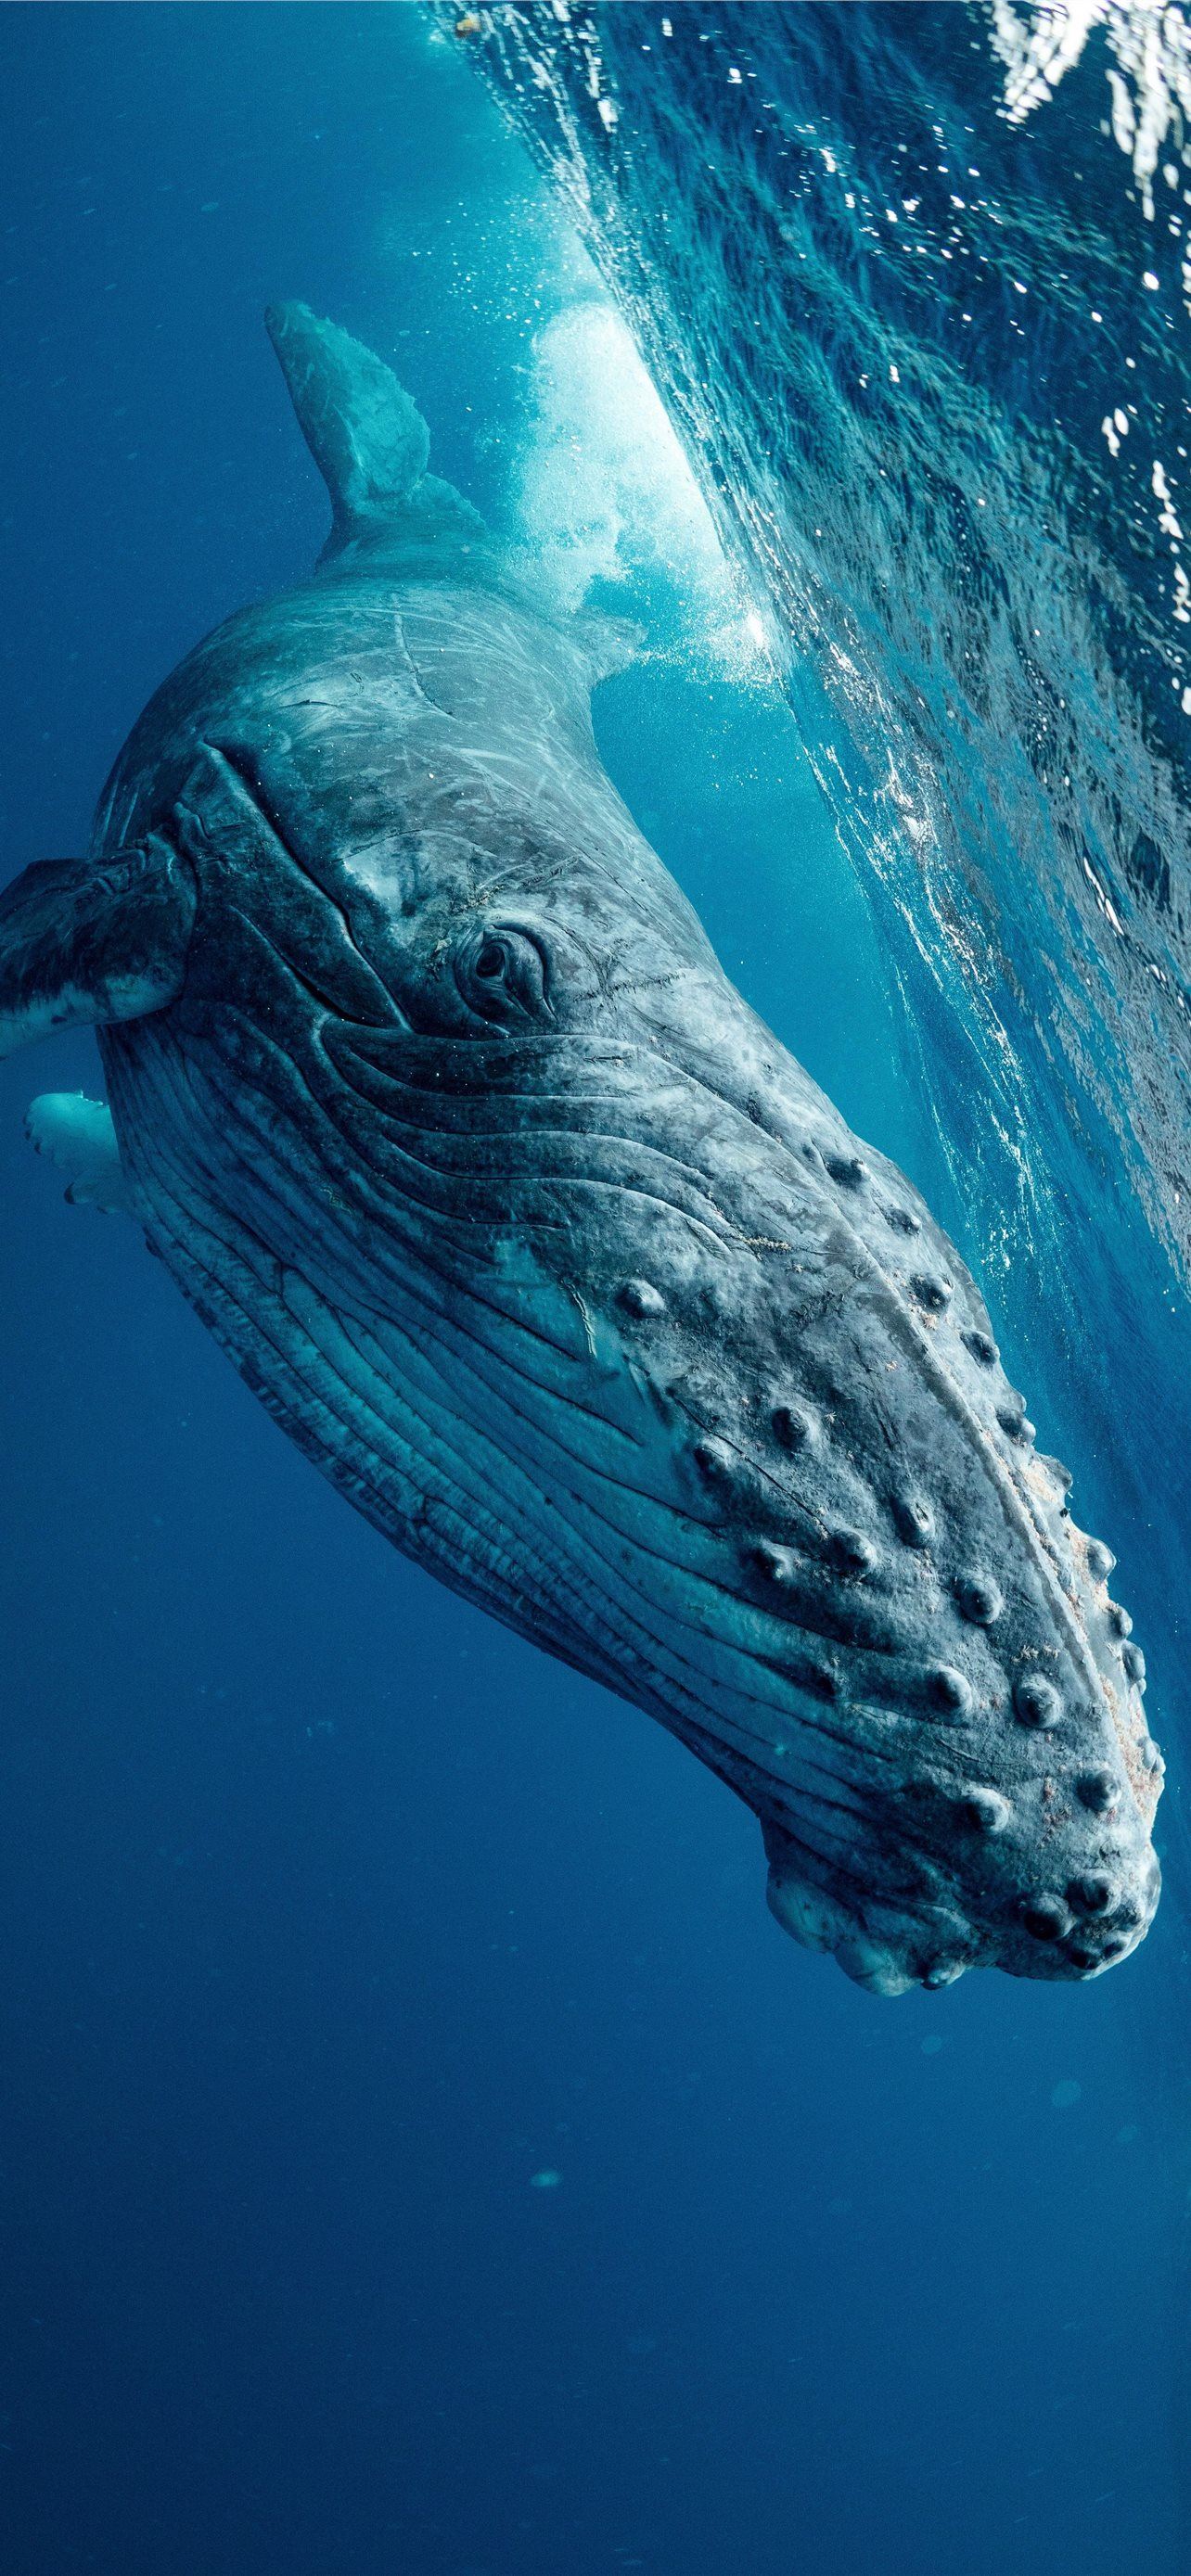 The Whale wallpaper by dobiestones  Download on ZEDGE  5b4b